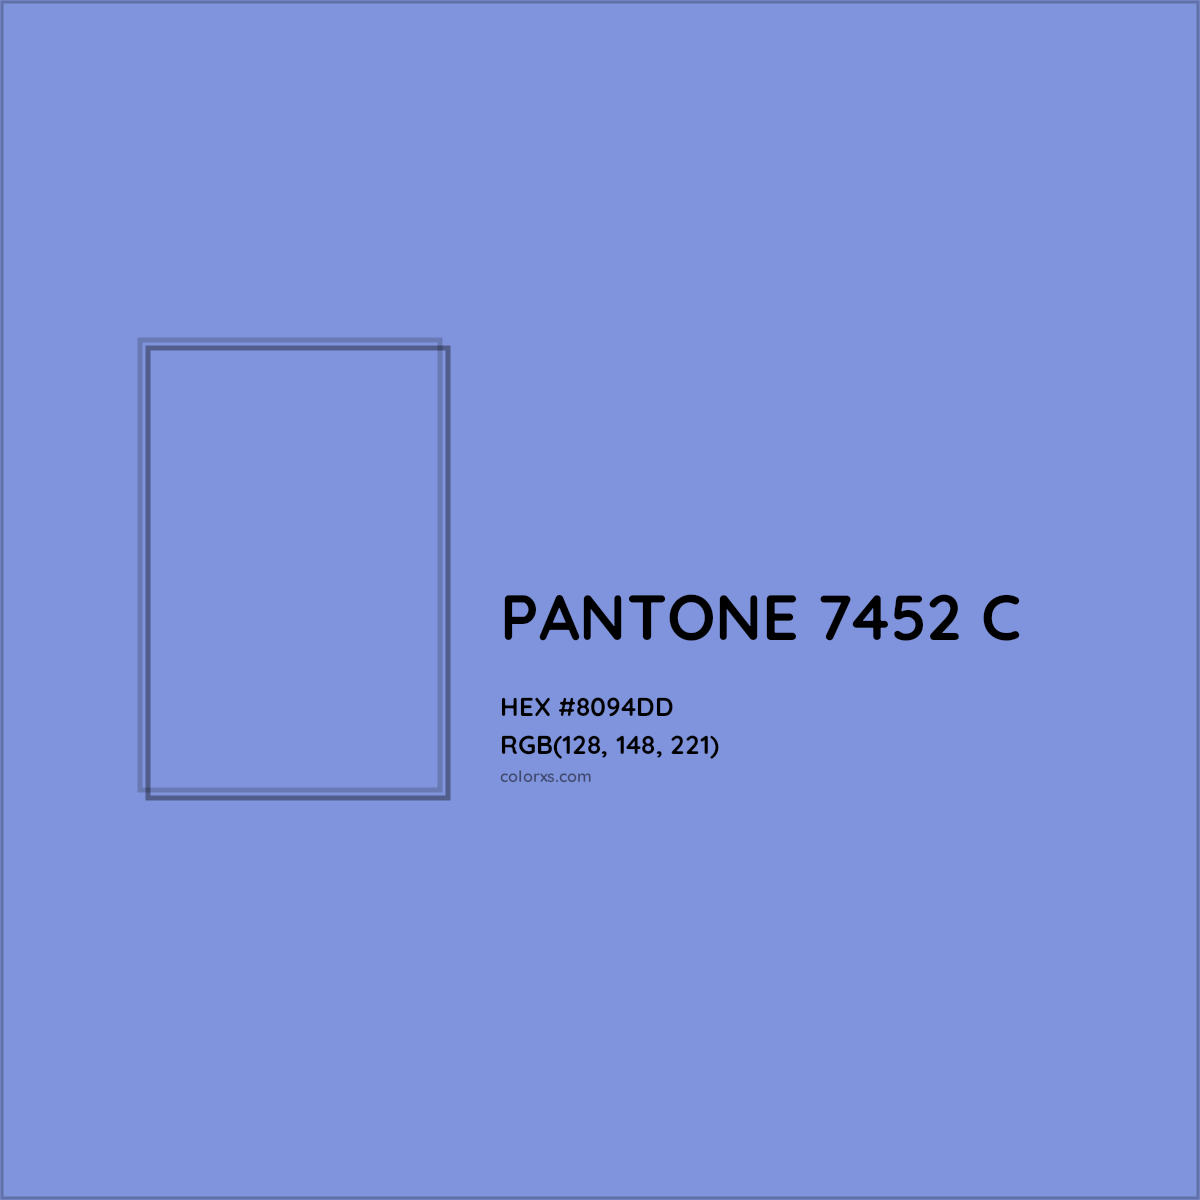 HEX #8094DD PANTONE 7452 C CMS Pantone PMS - Color Code